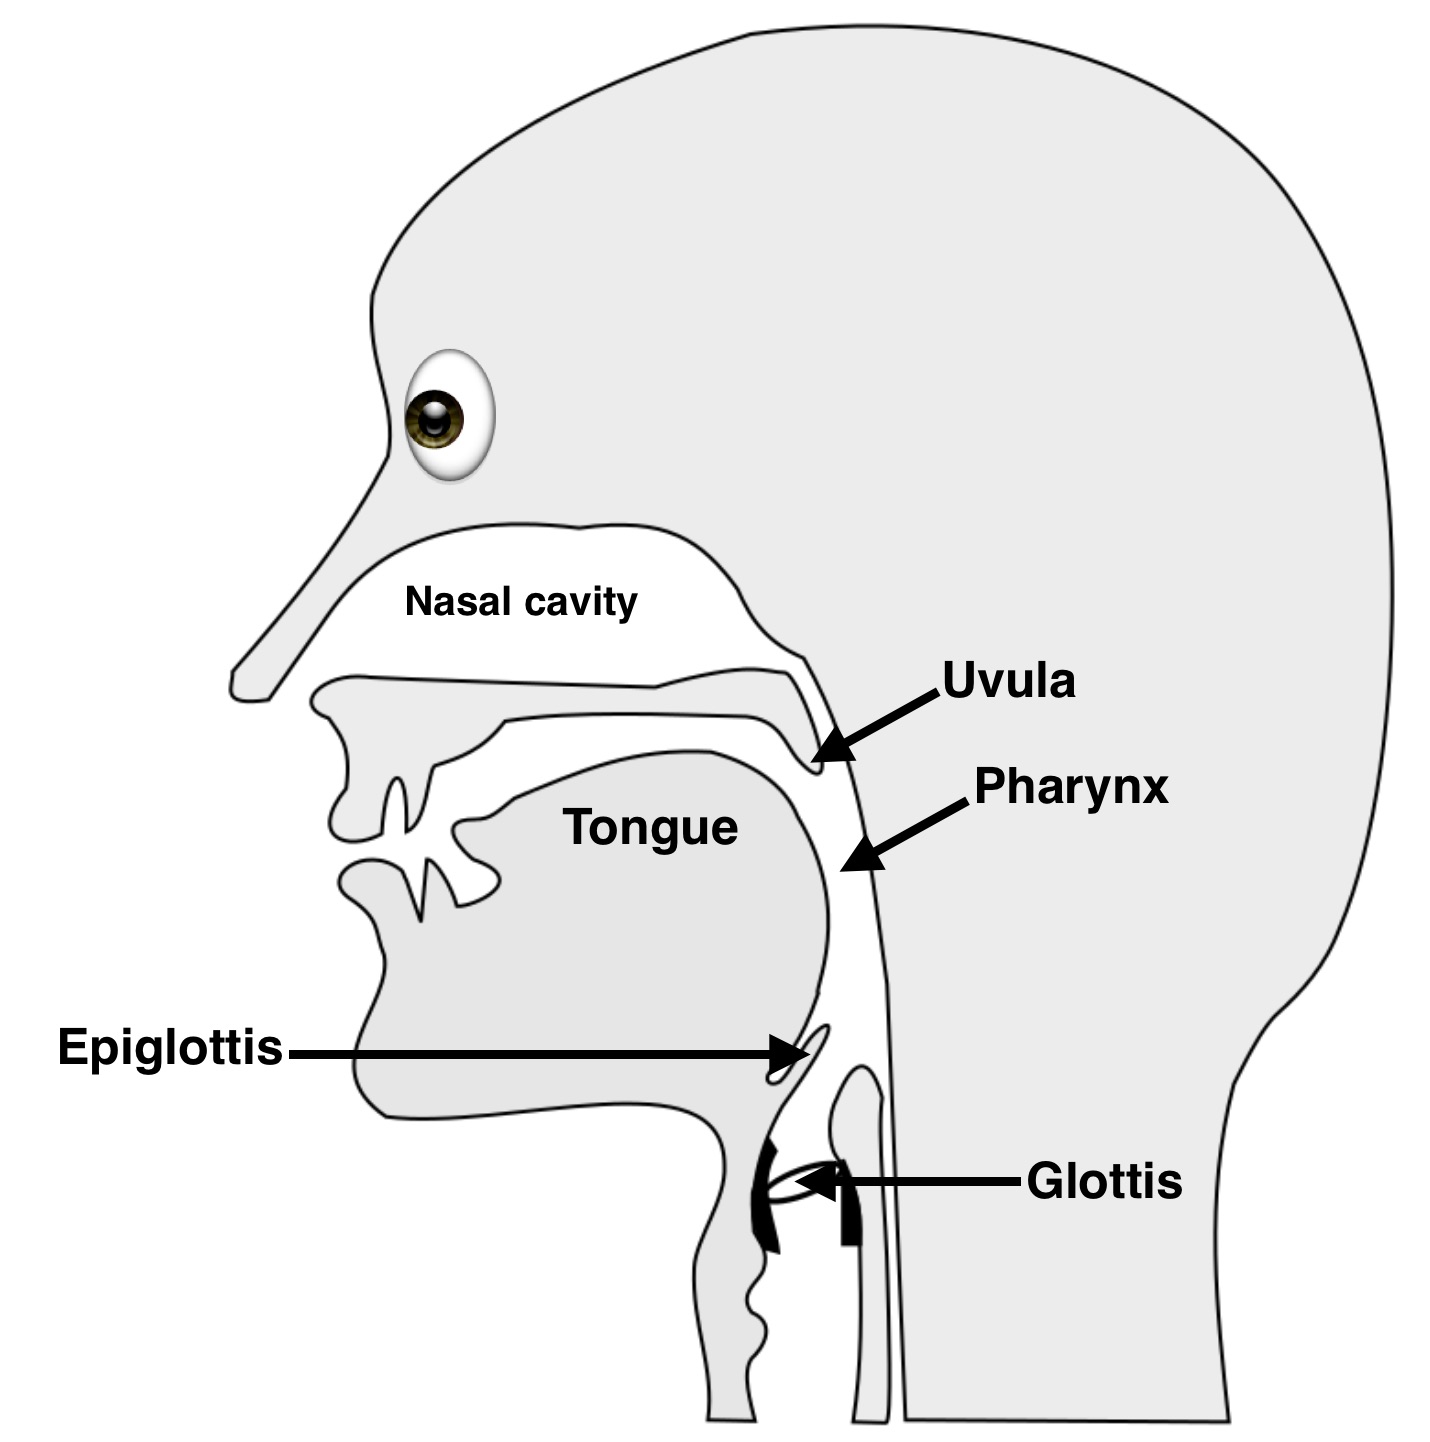 Diagram of human head with Epiglottis, Uvula, Pharynx, and Glottis highlighted